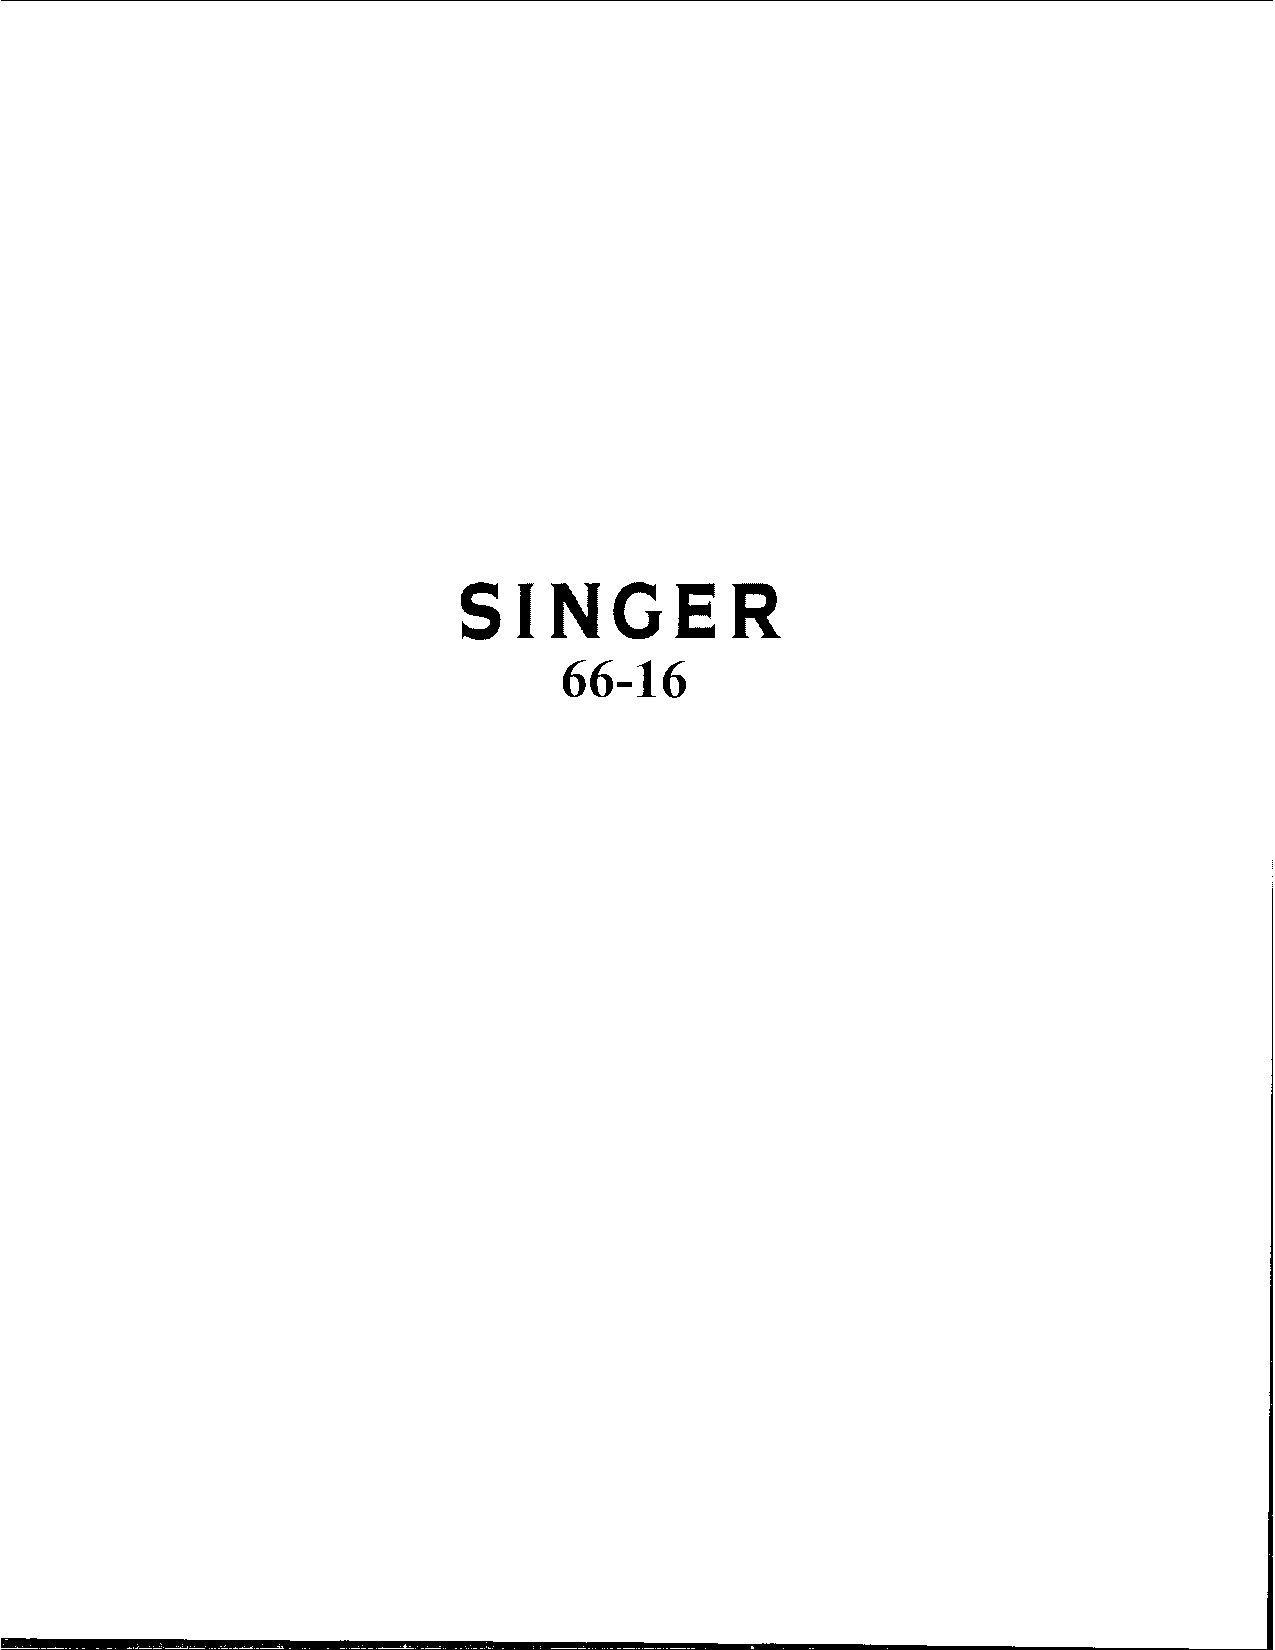 Singer 66-16 User Manual